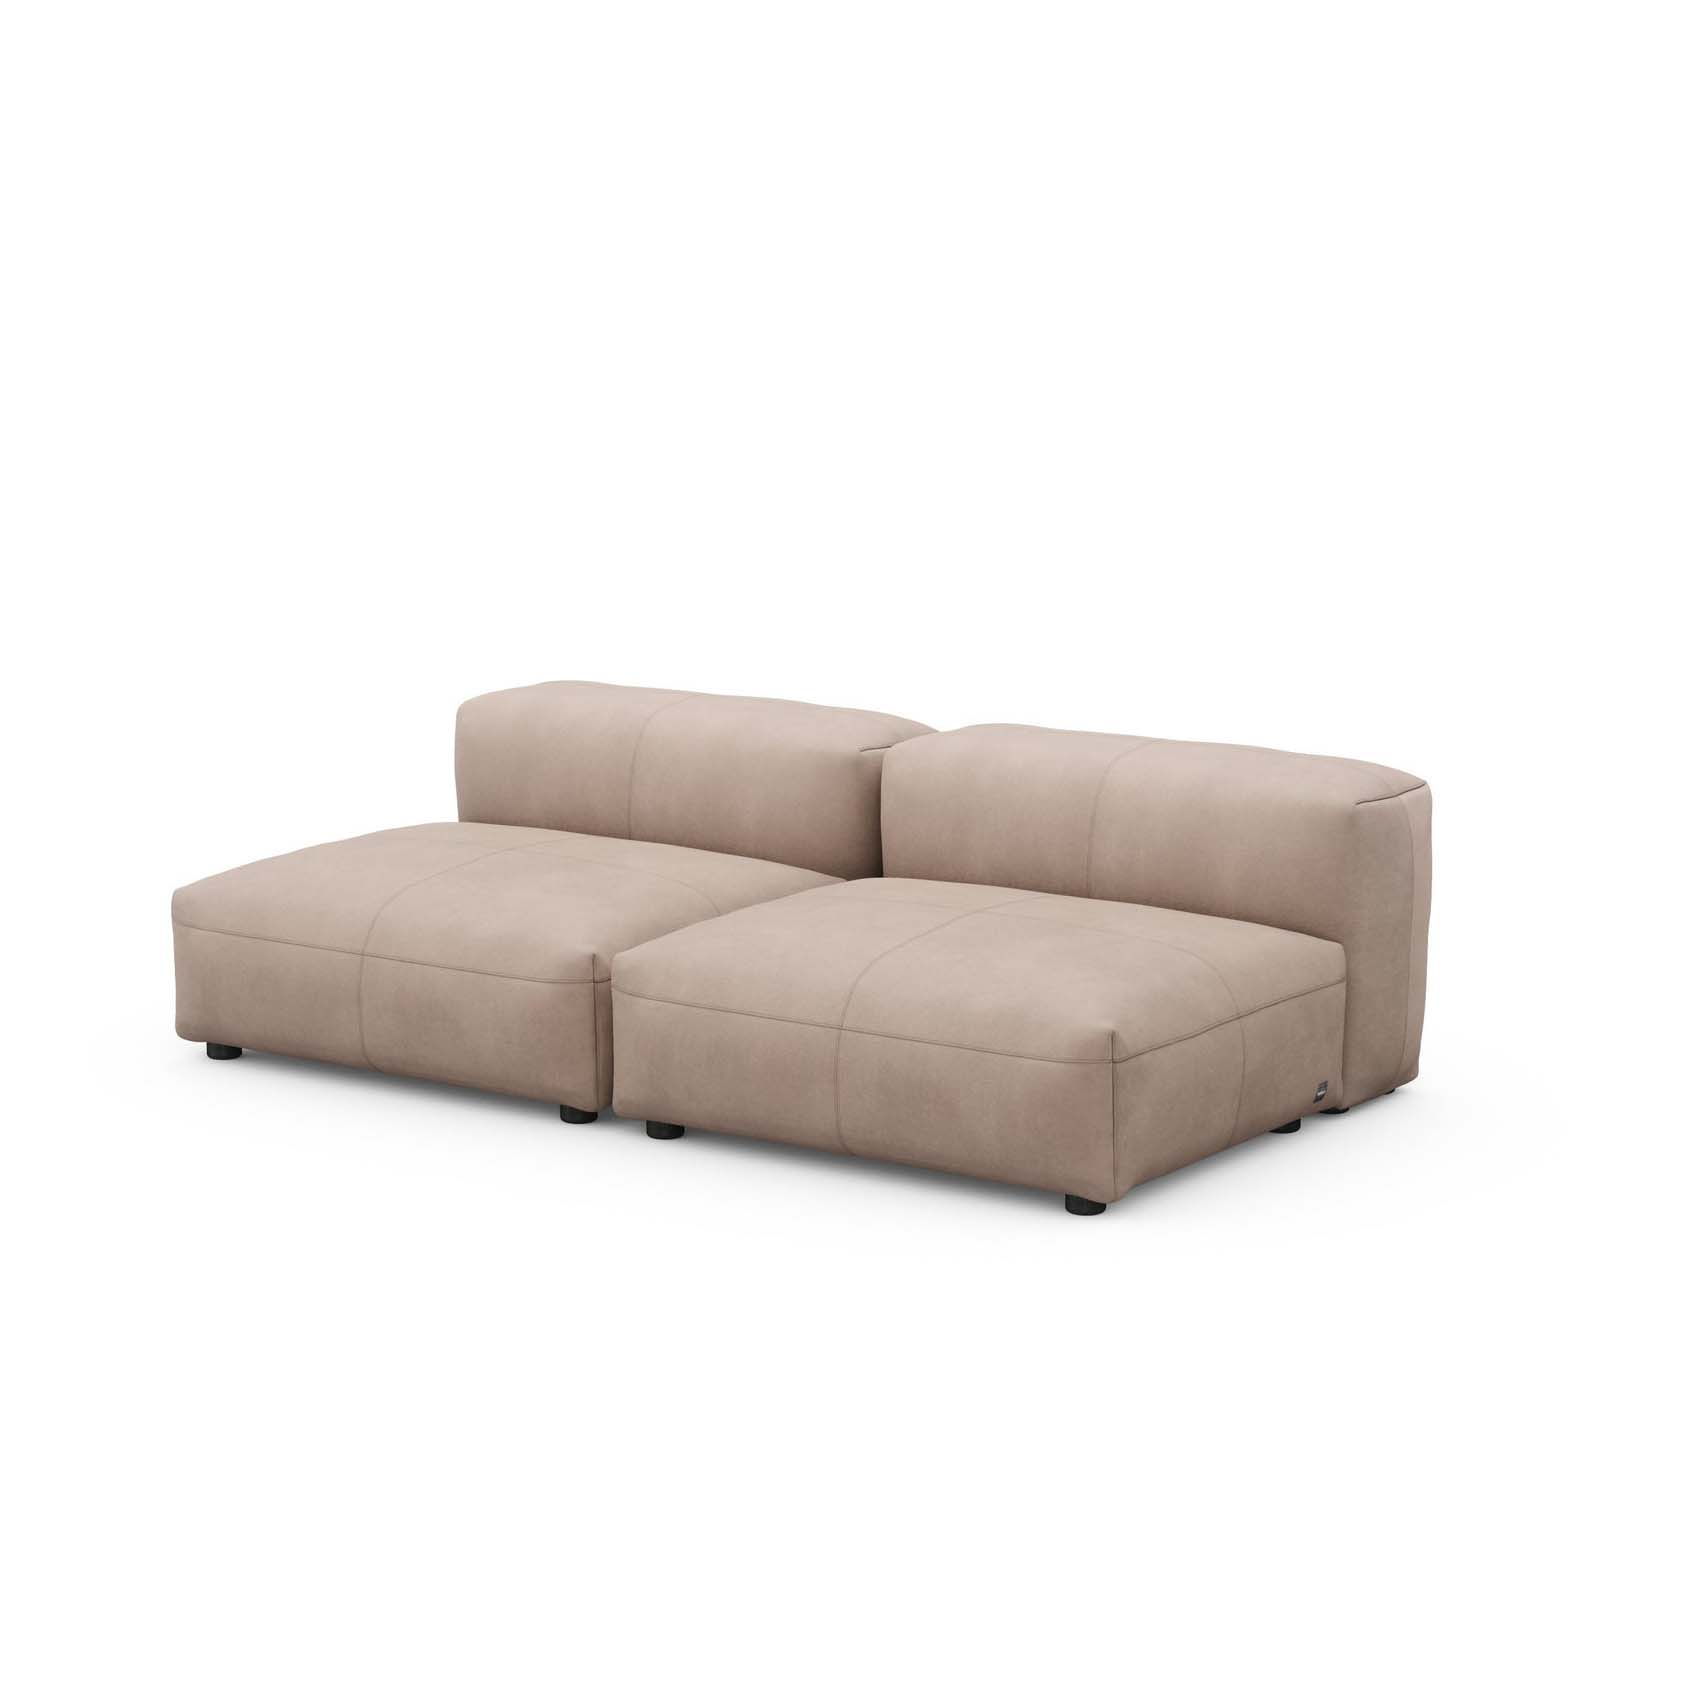 Two Seat Lounge Sofa M Leather Stone